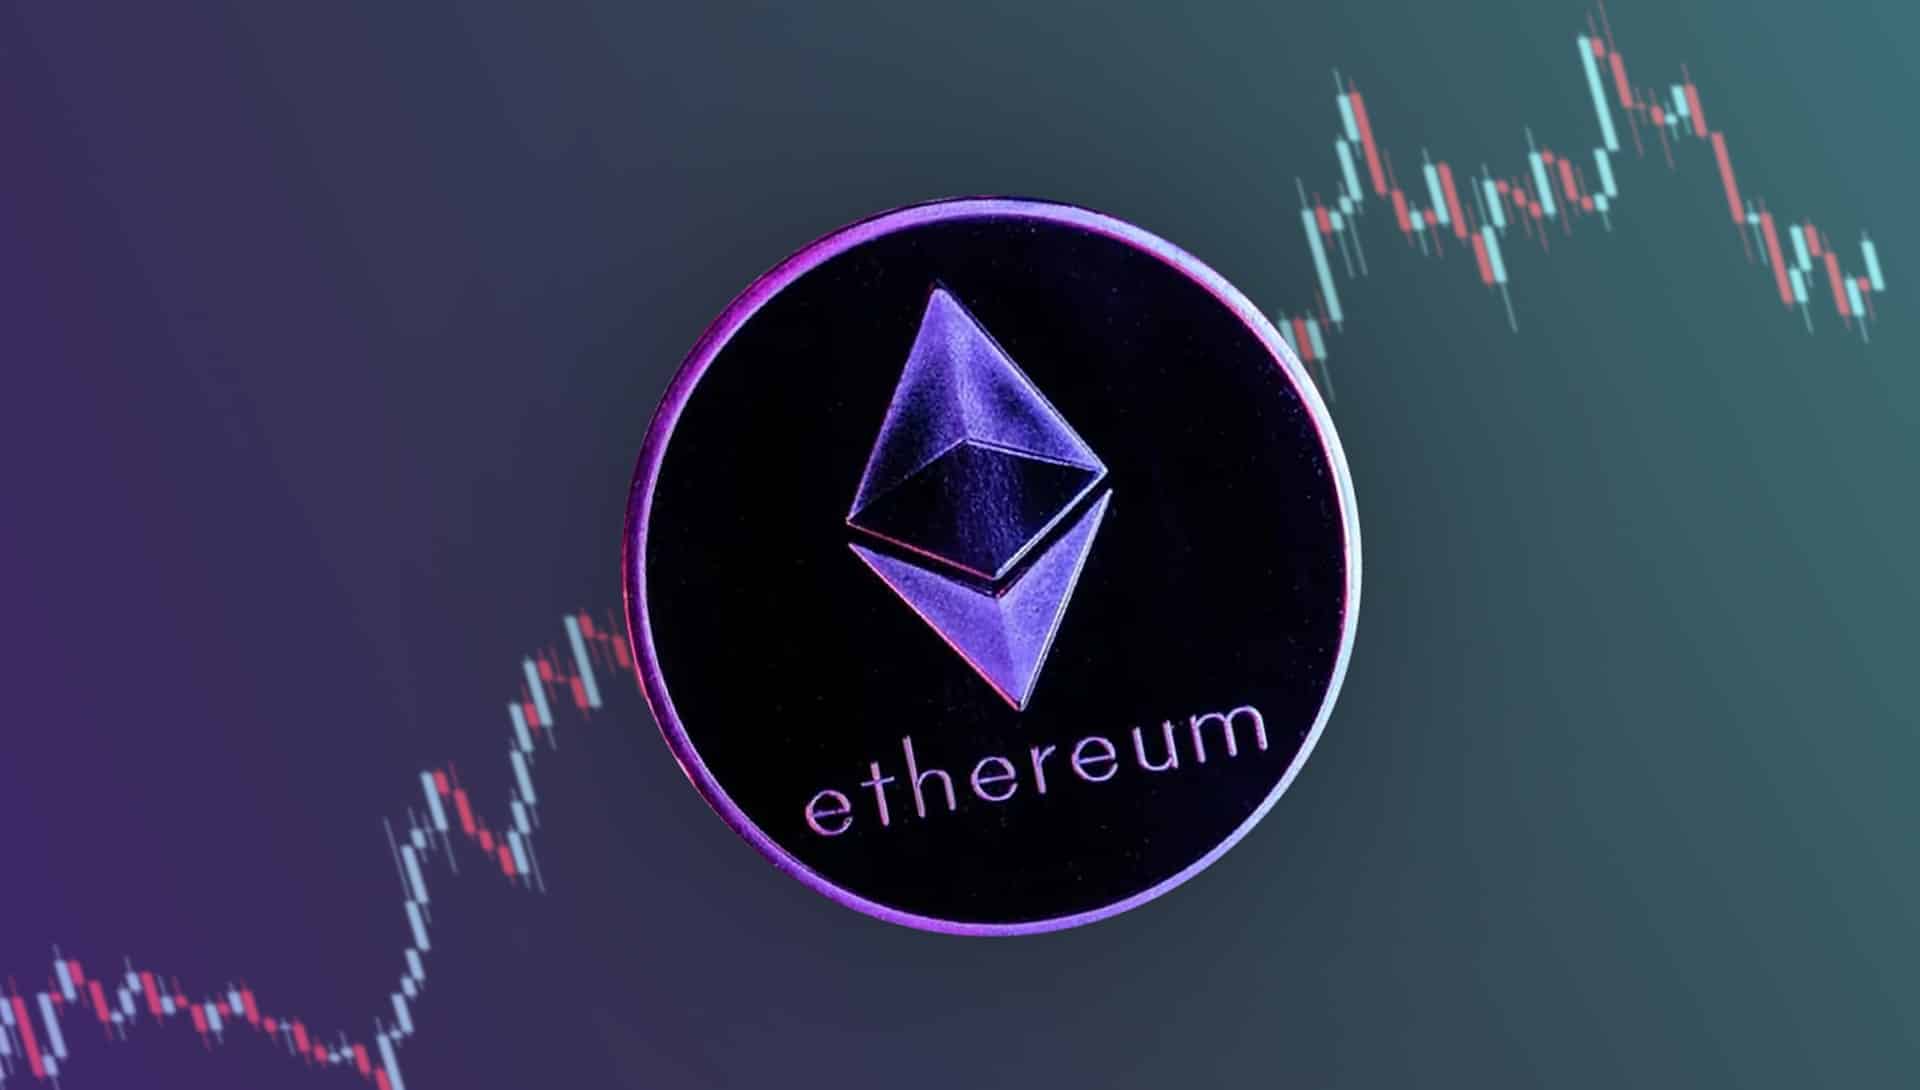 Ethereum News: Krypto-Whales investierten letzten Monat fast 1 Milliarde USD in ETH - Coincierge.de | Bitcoin-Blog